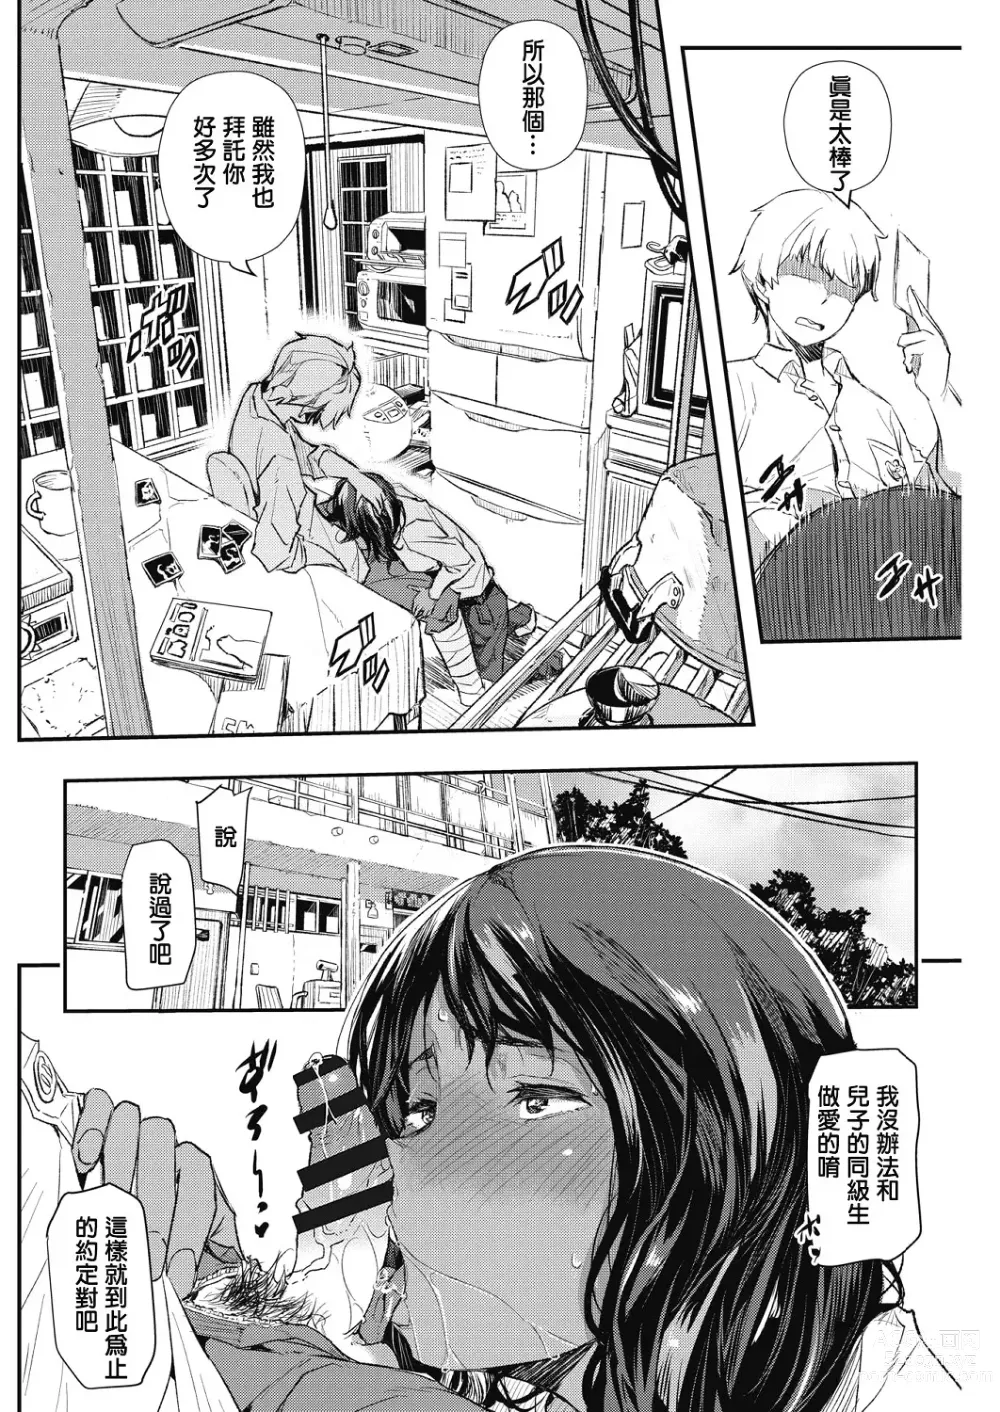 Page 2 of manga Hairan Yu-gi